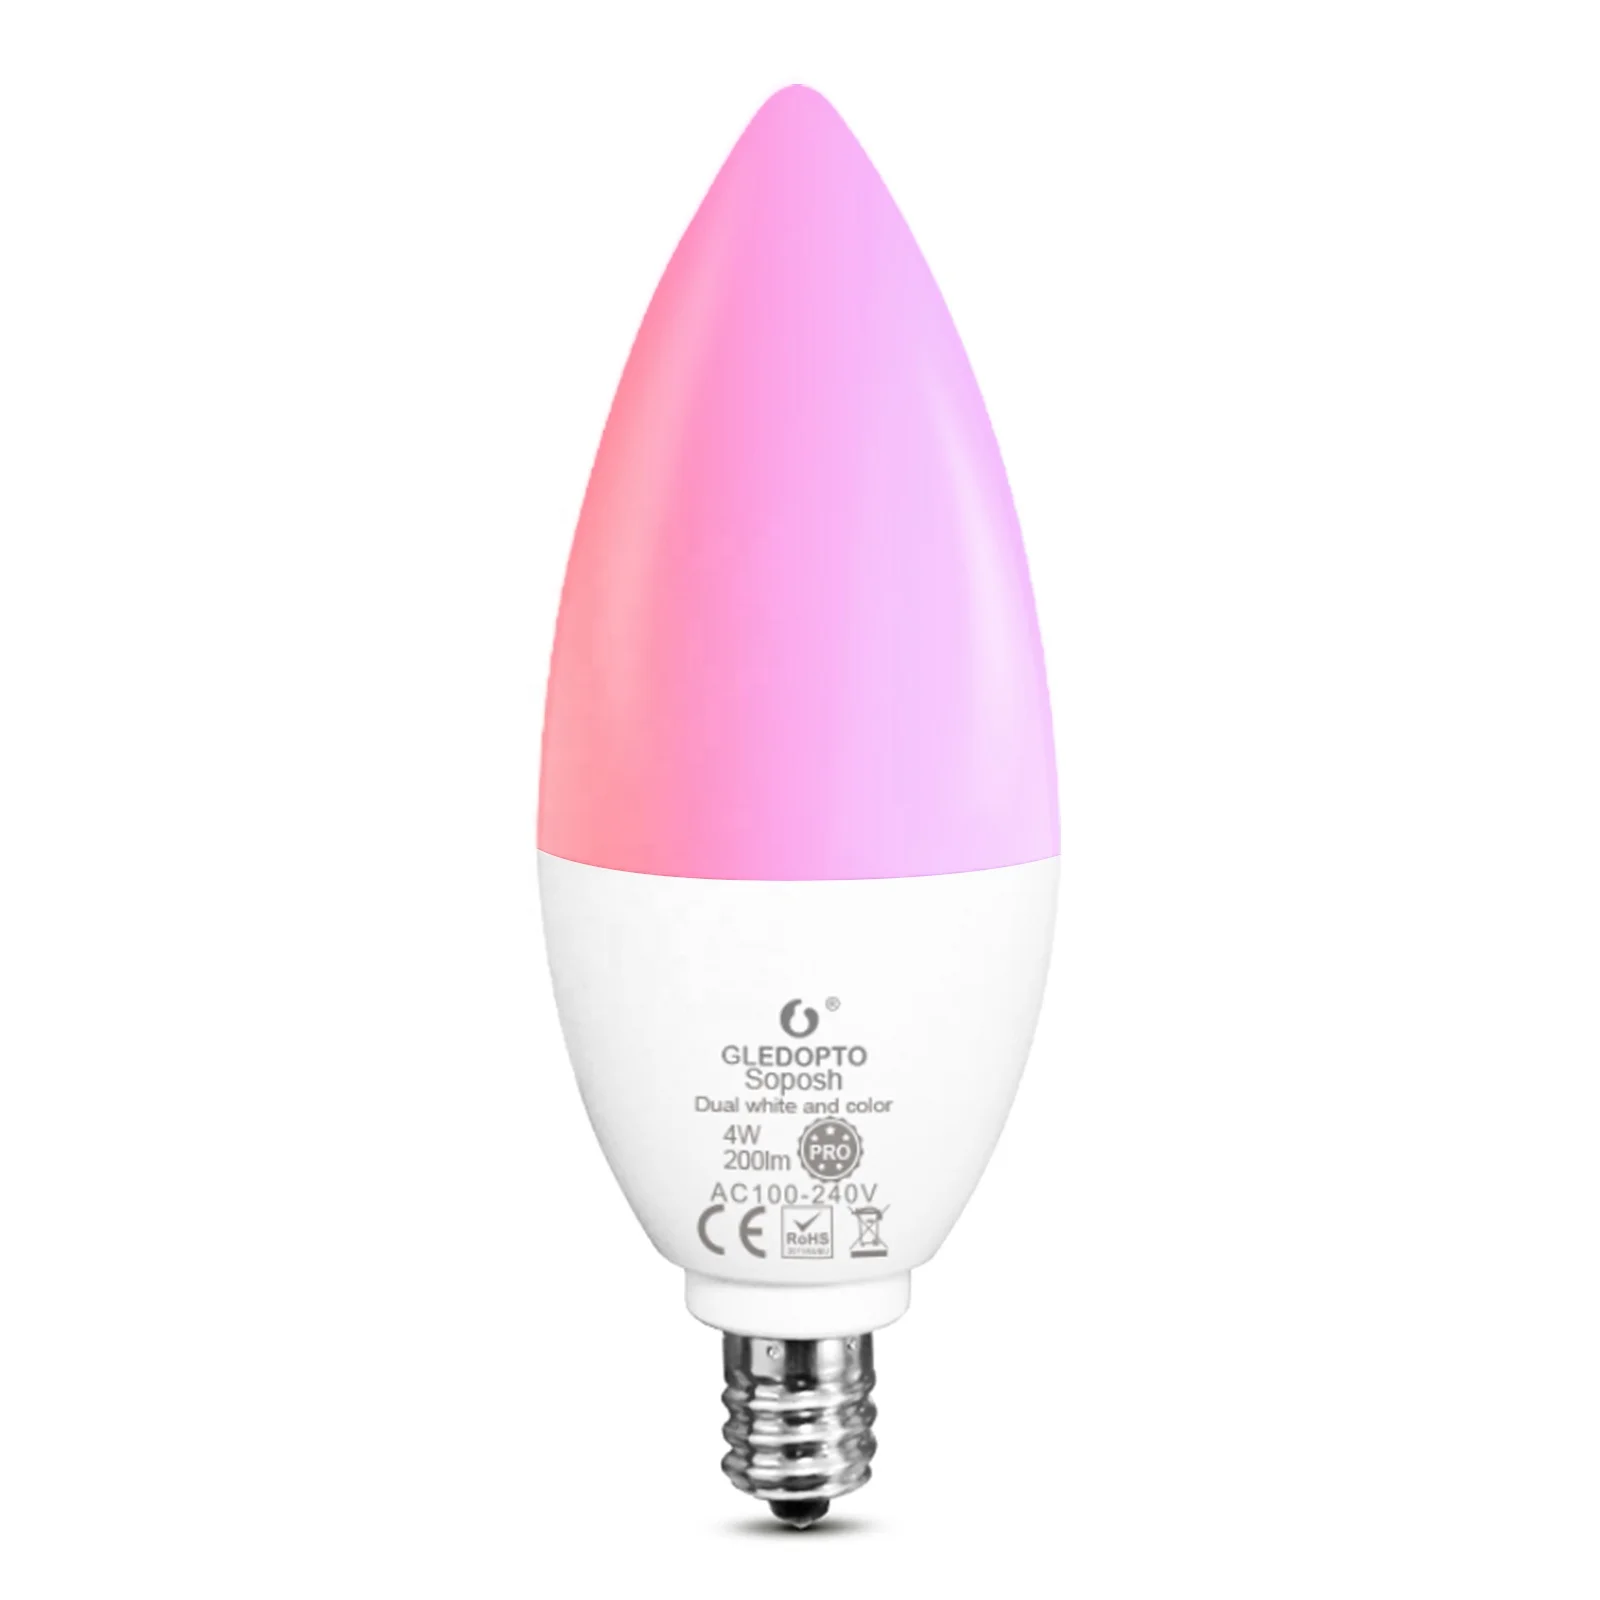 ZIGBEE PRO Wireless LED E14 LED Bulb Multi-color E12 LED Light GLEDOPTO Smart Home Lighting